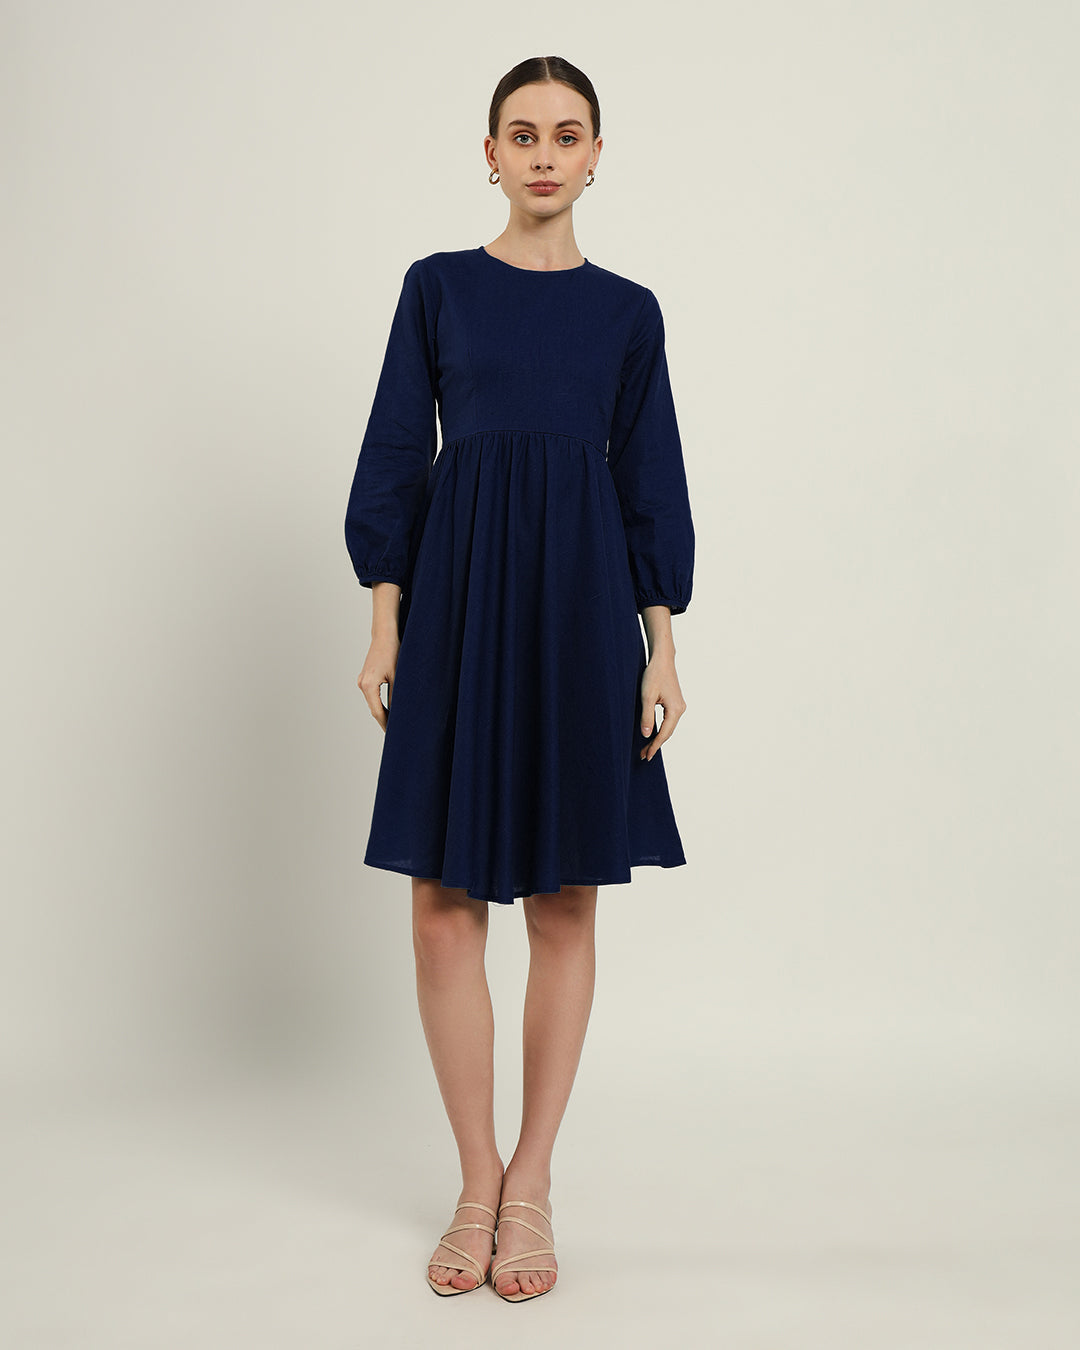 The Exeter Daisy Midnight Blue Linen Dress